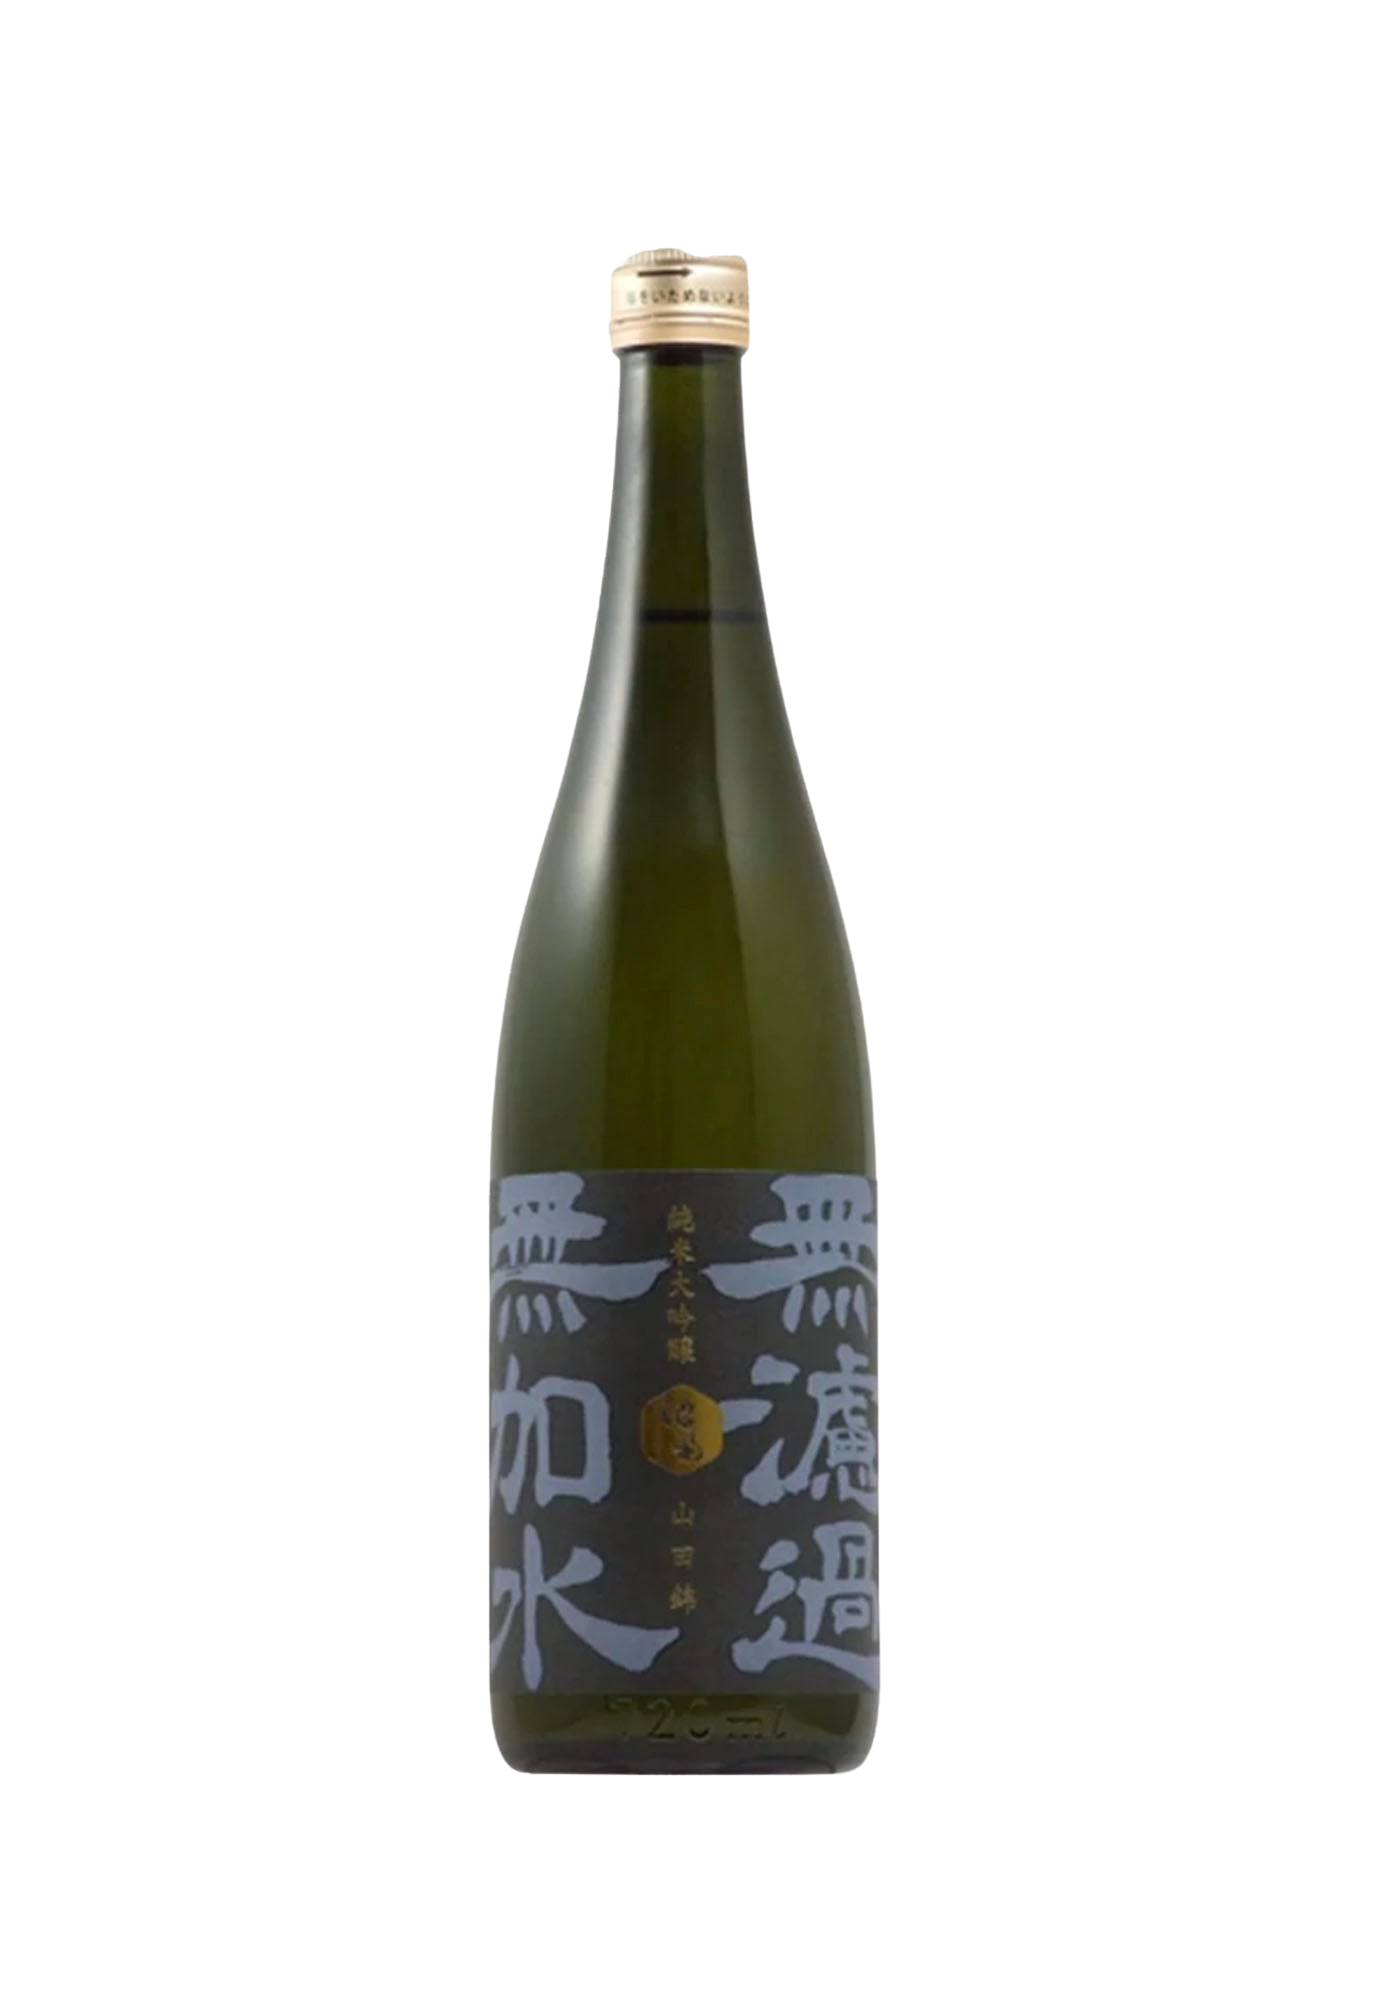 Ikekame Muroka Mukasui Junmai Daiginjo Sake - 720 ml